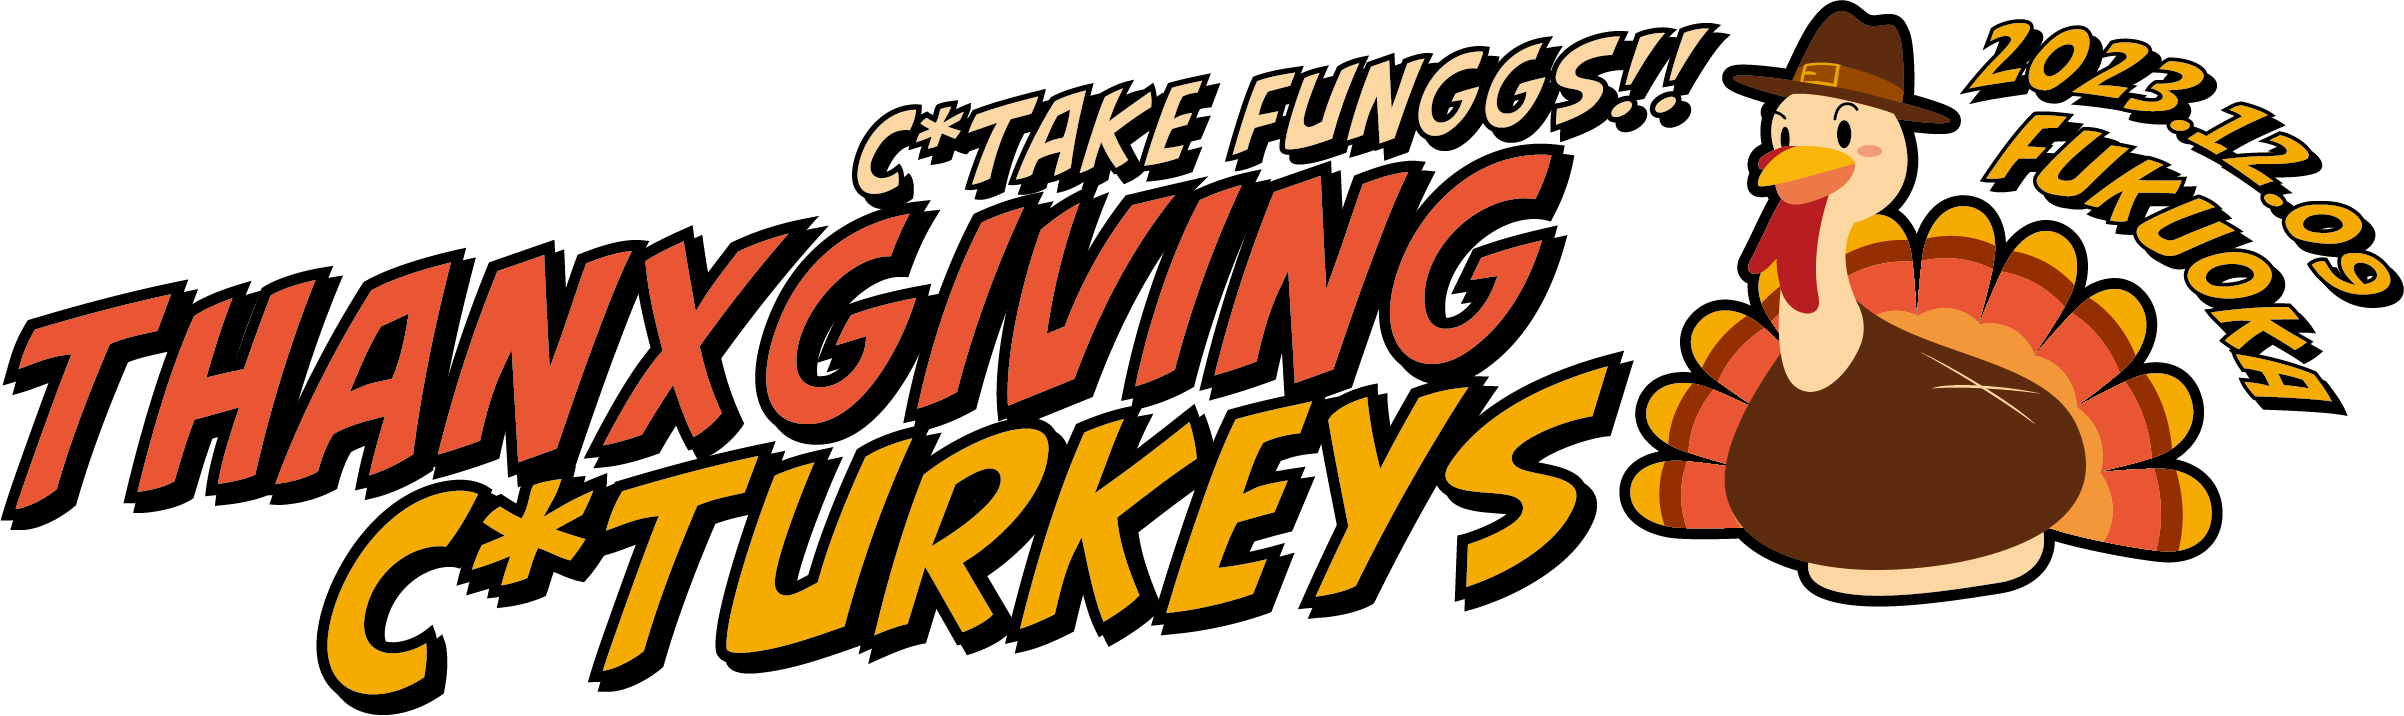 reche_THANXGIVINGc-TURKEYS_logo_FUKUOKA